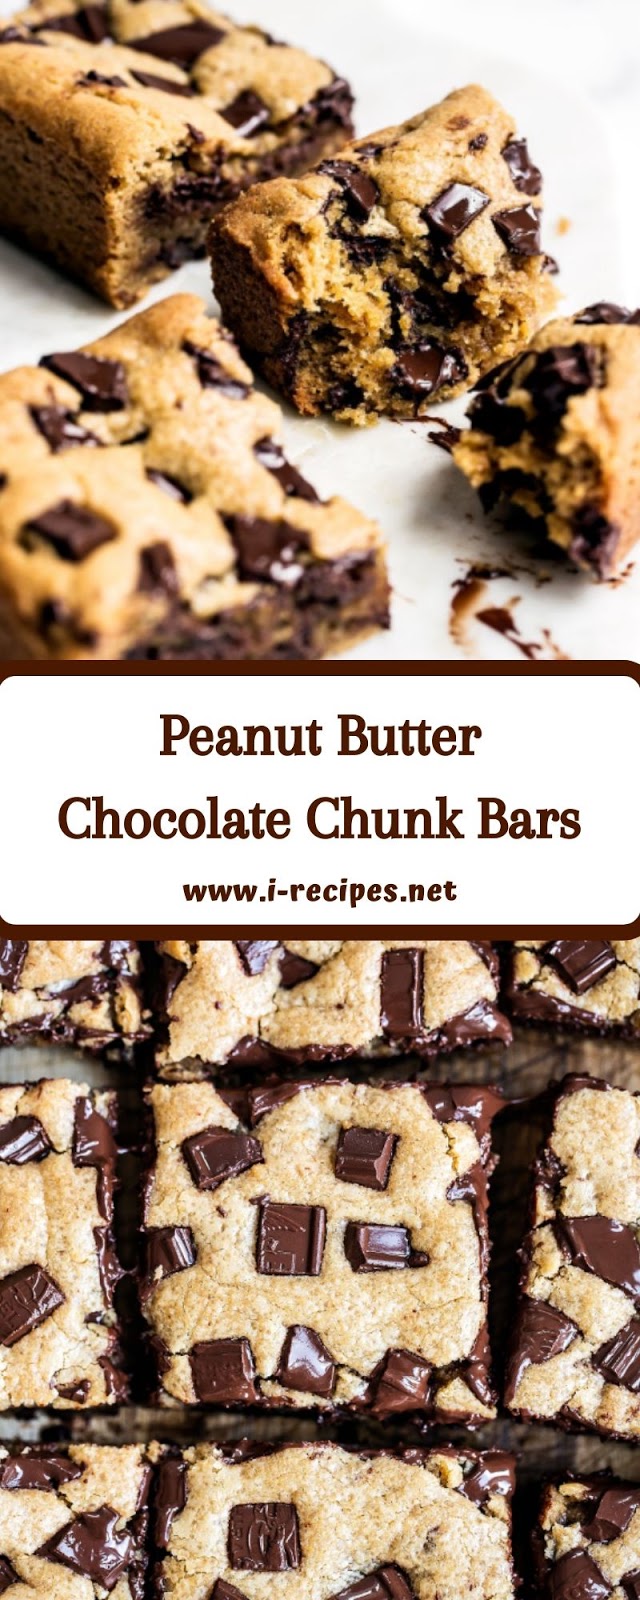 Peanut Butter Chocolate Chunk Bars